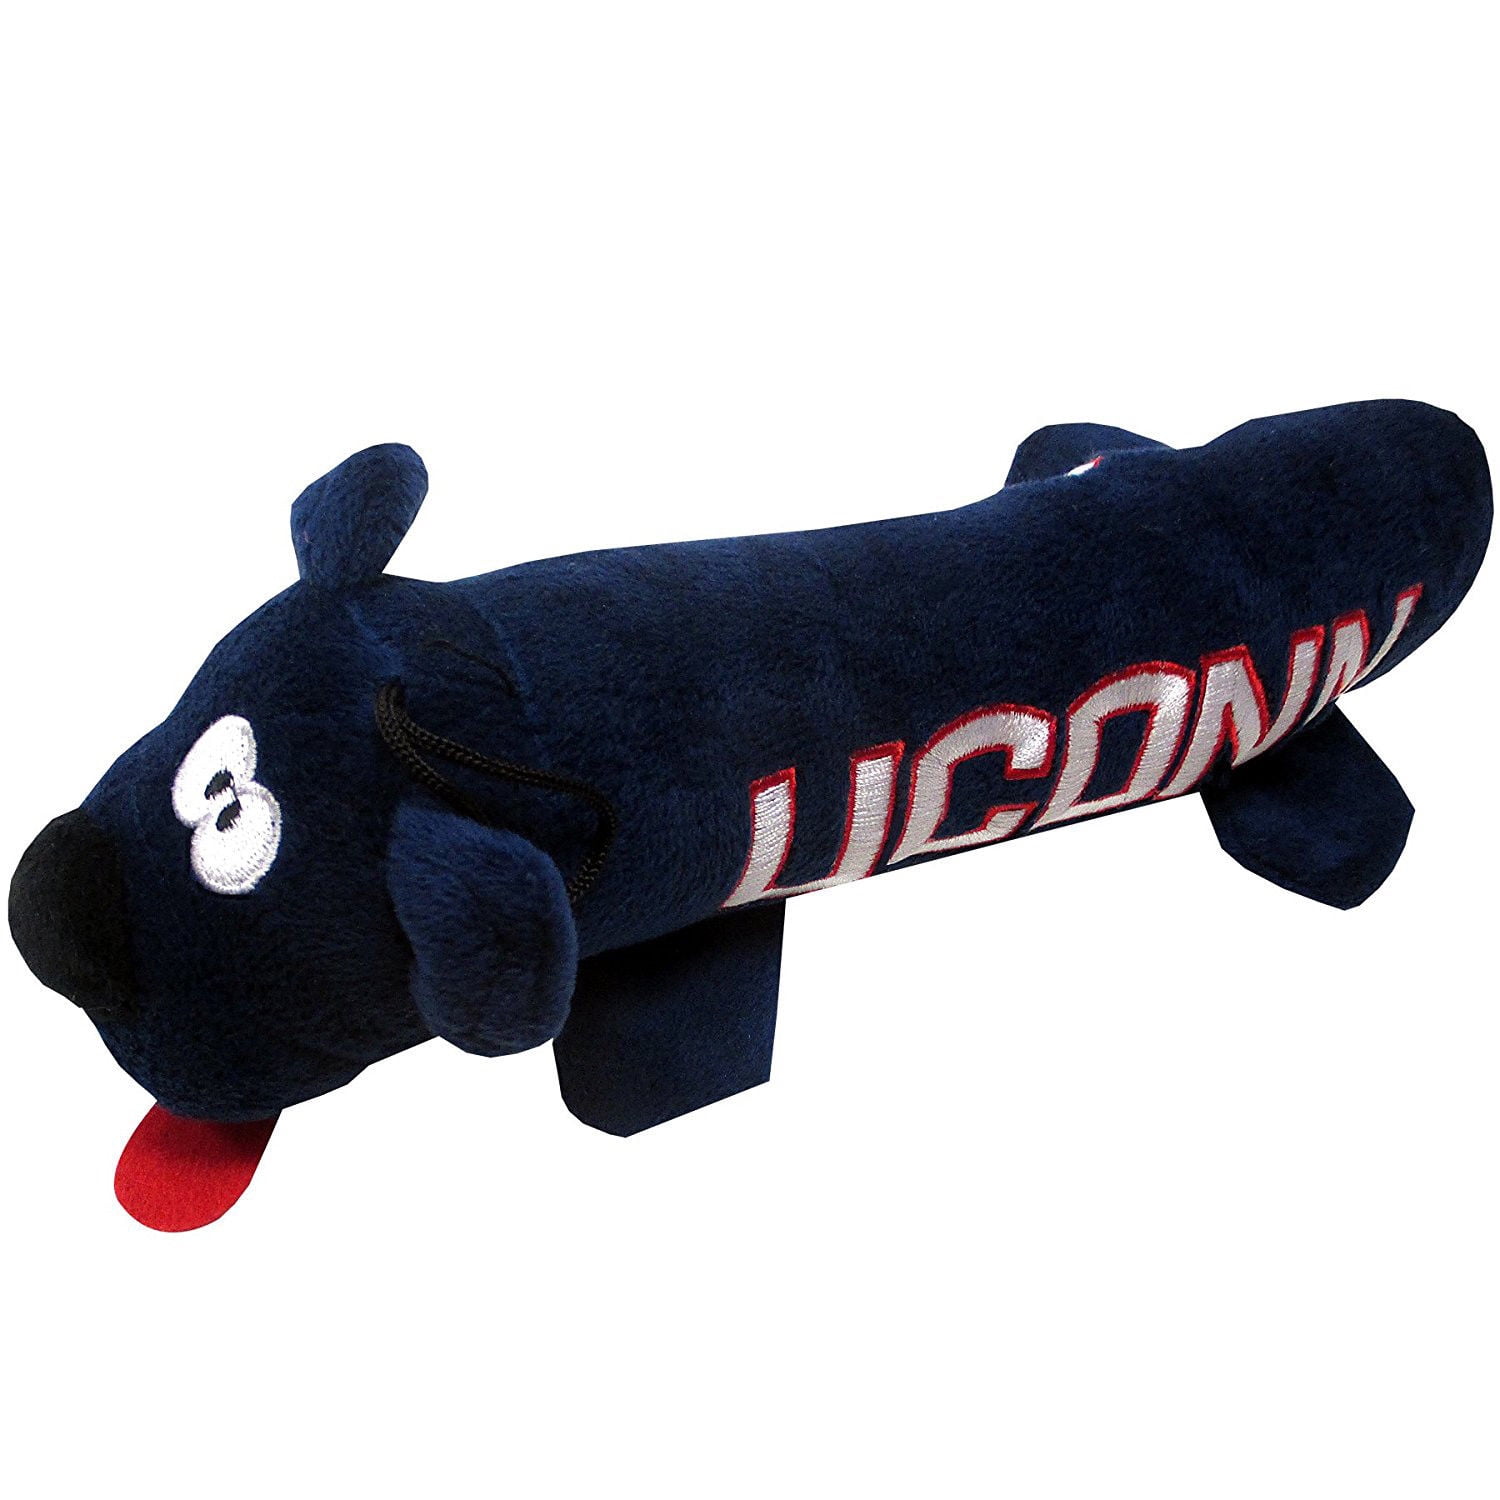 Uconn Huskies Dog Toy